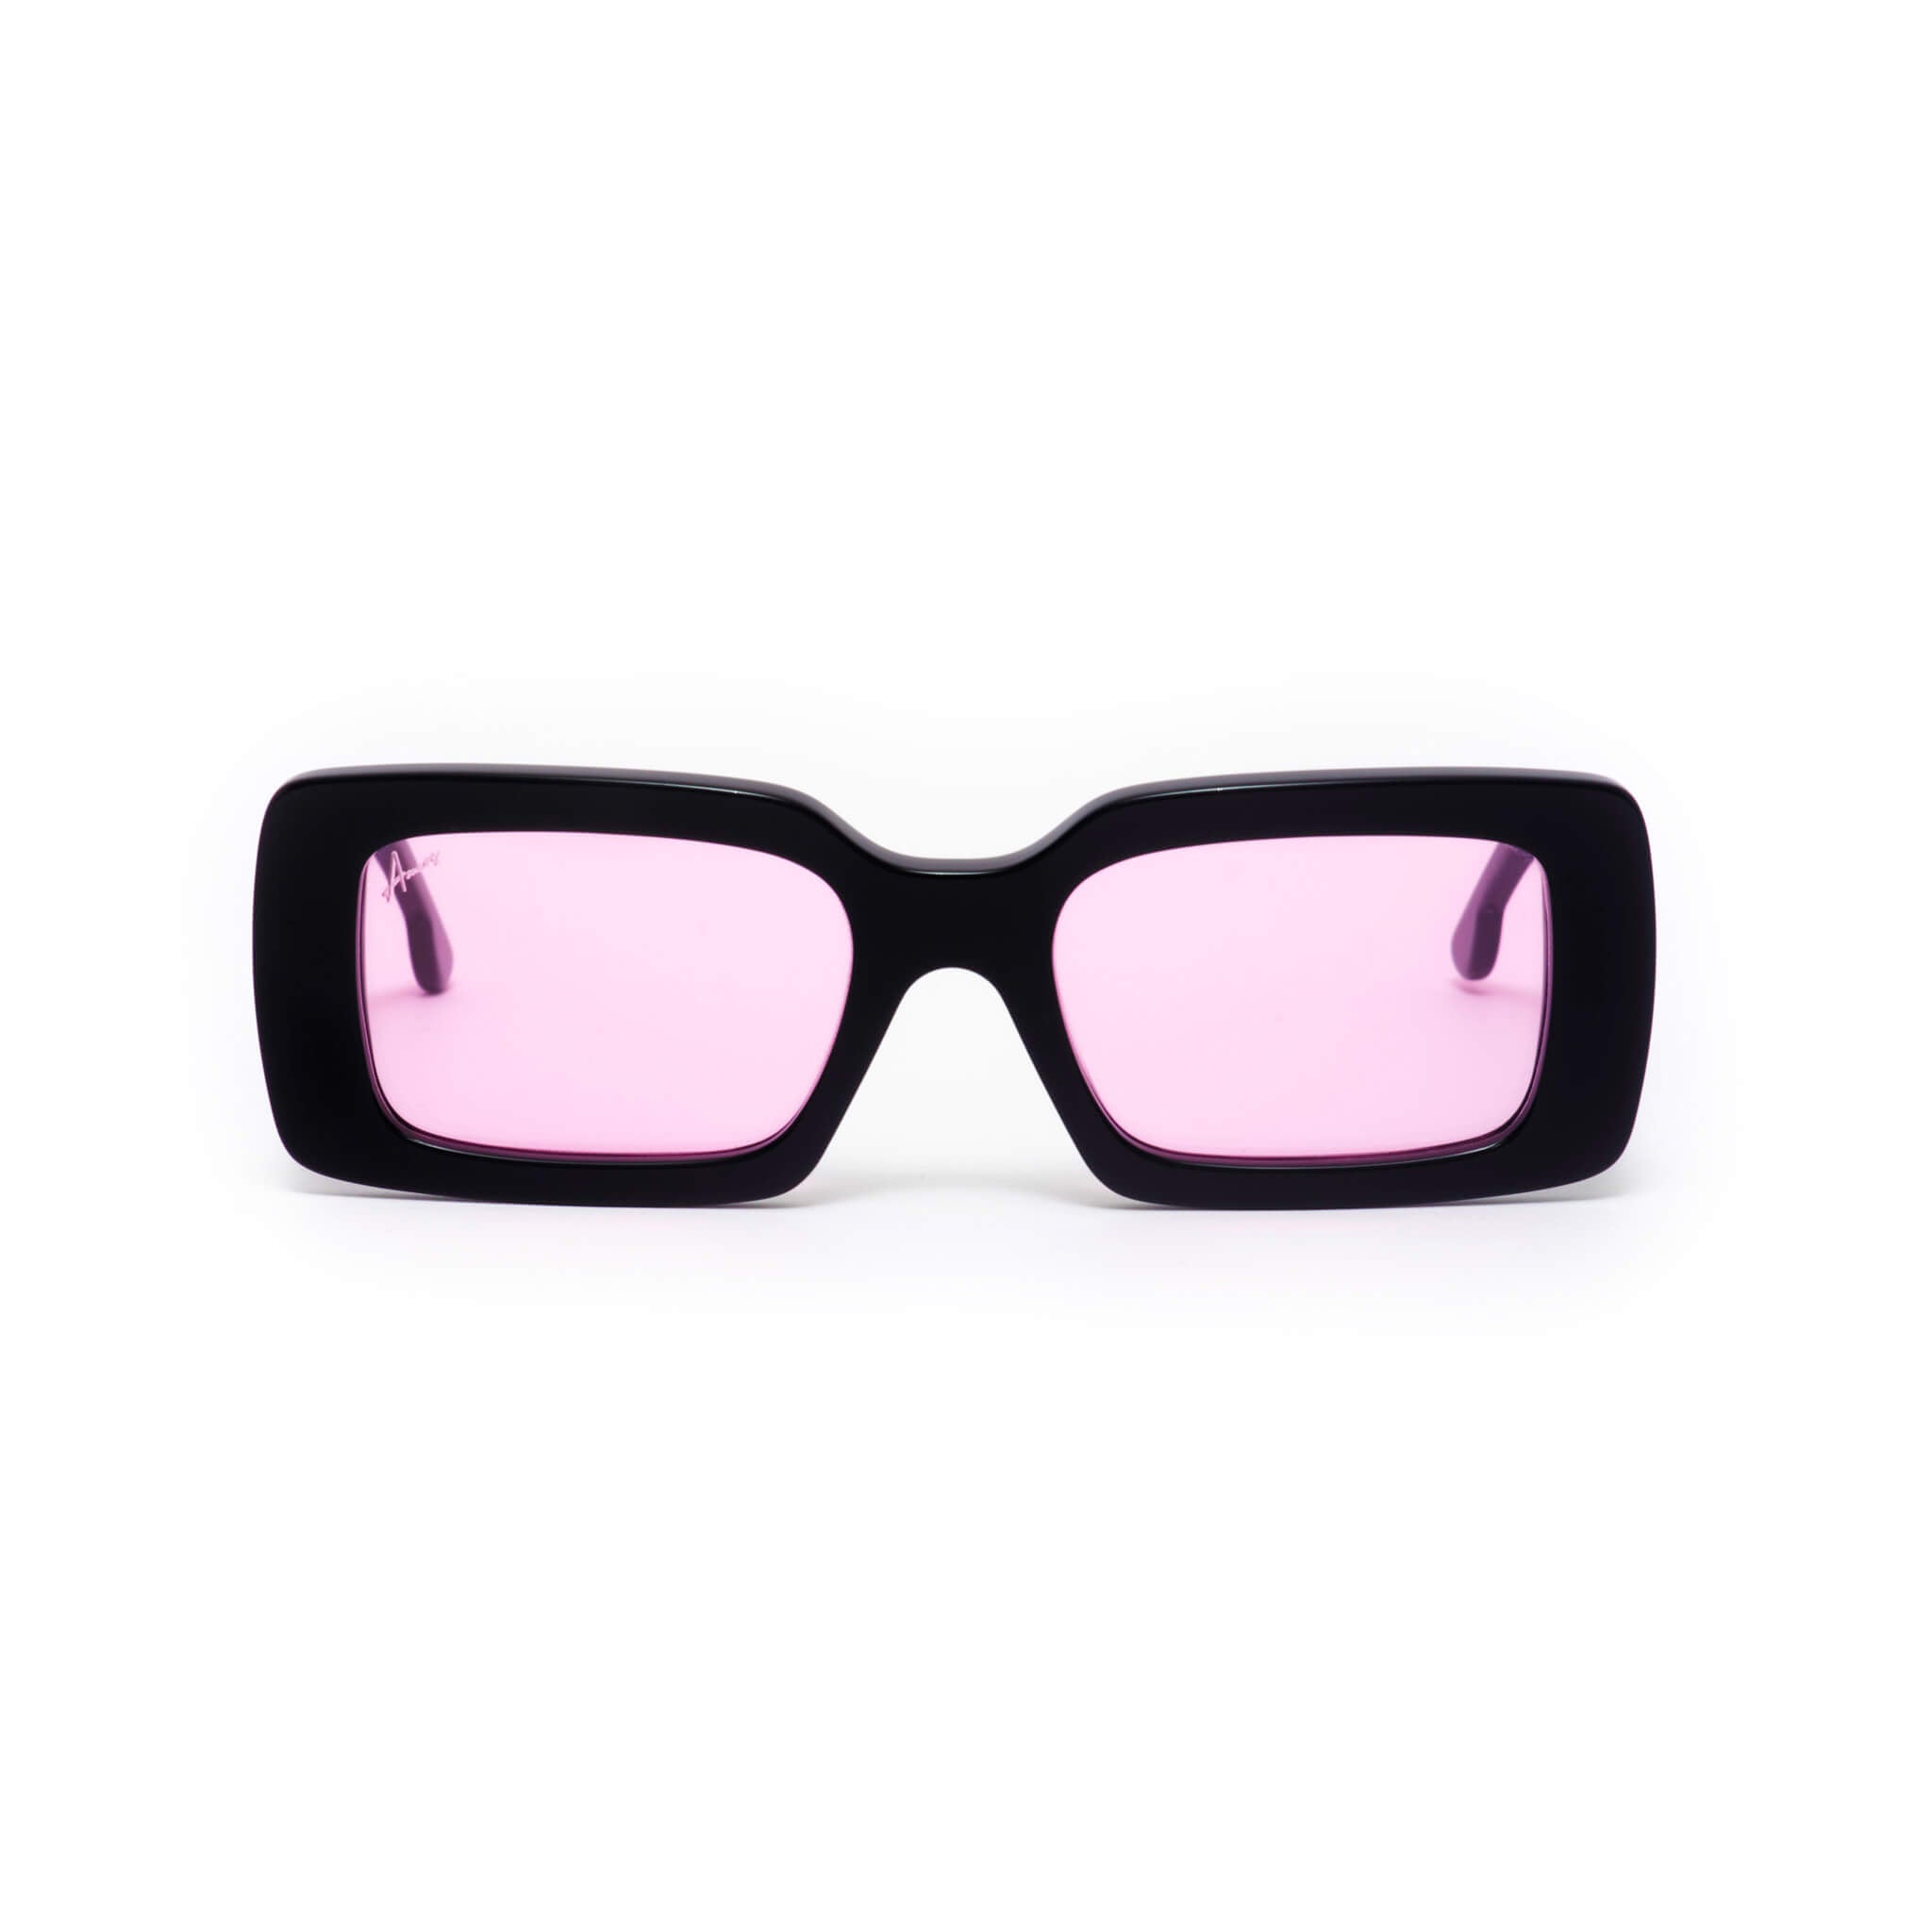 Black sunglasses frames with pink lenses